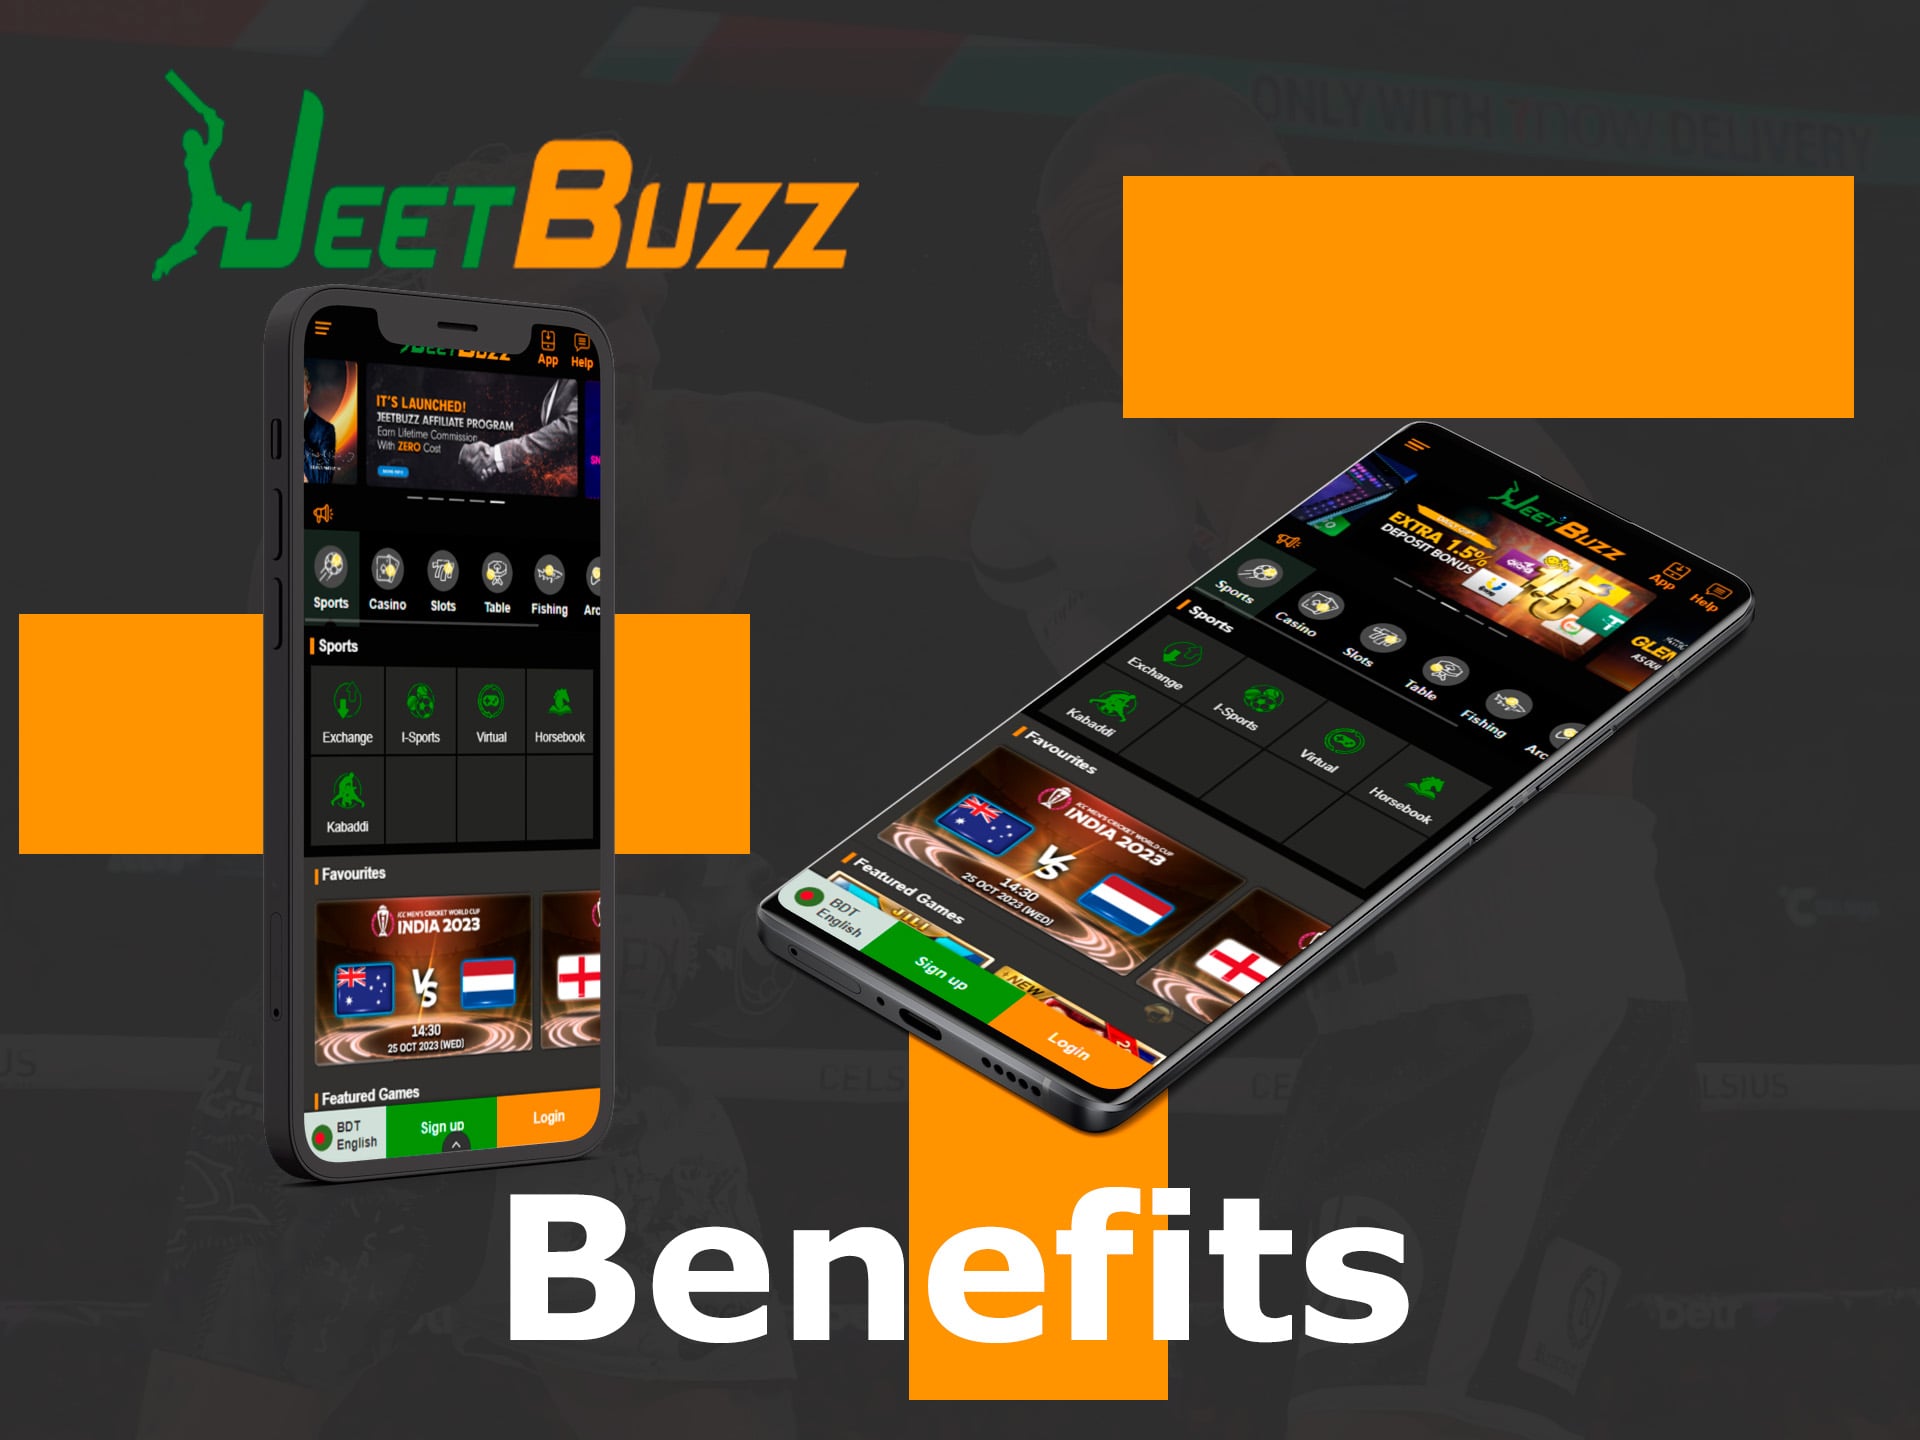 jeetbuzz app benefits